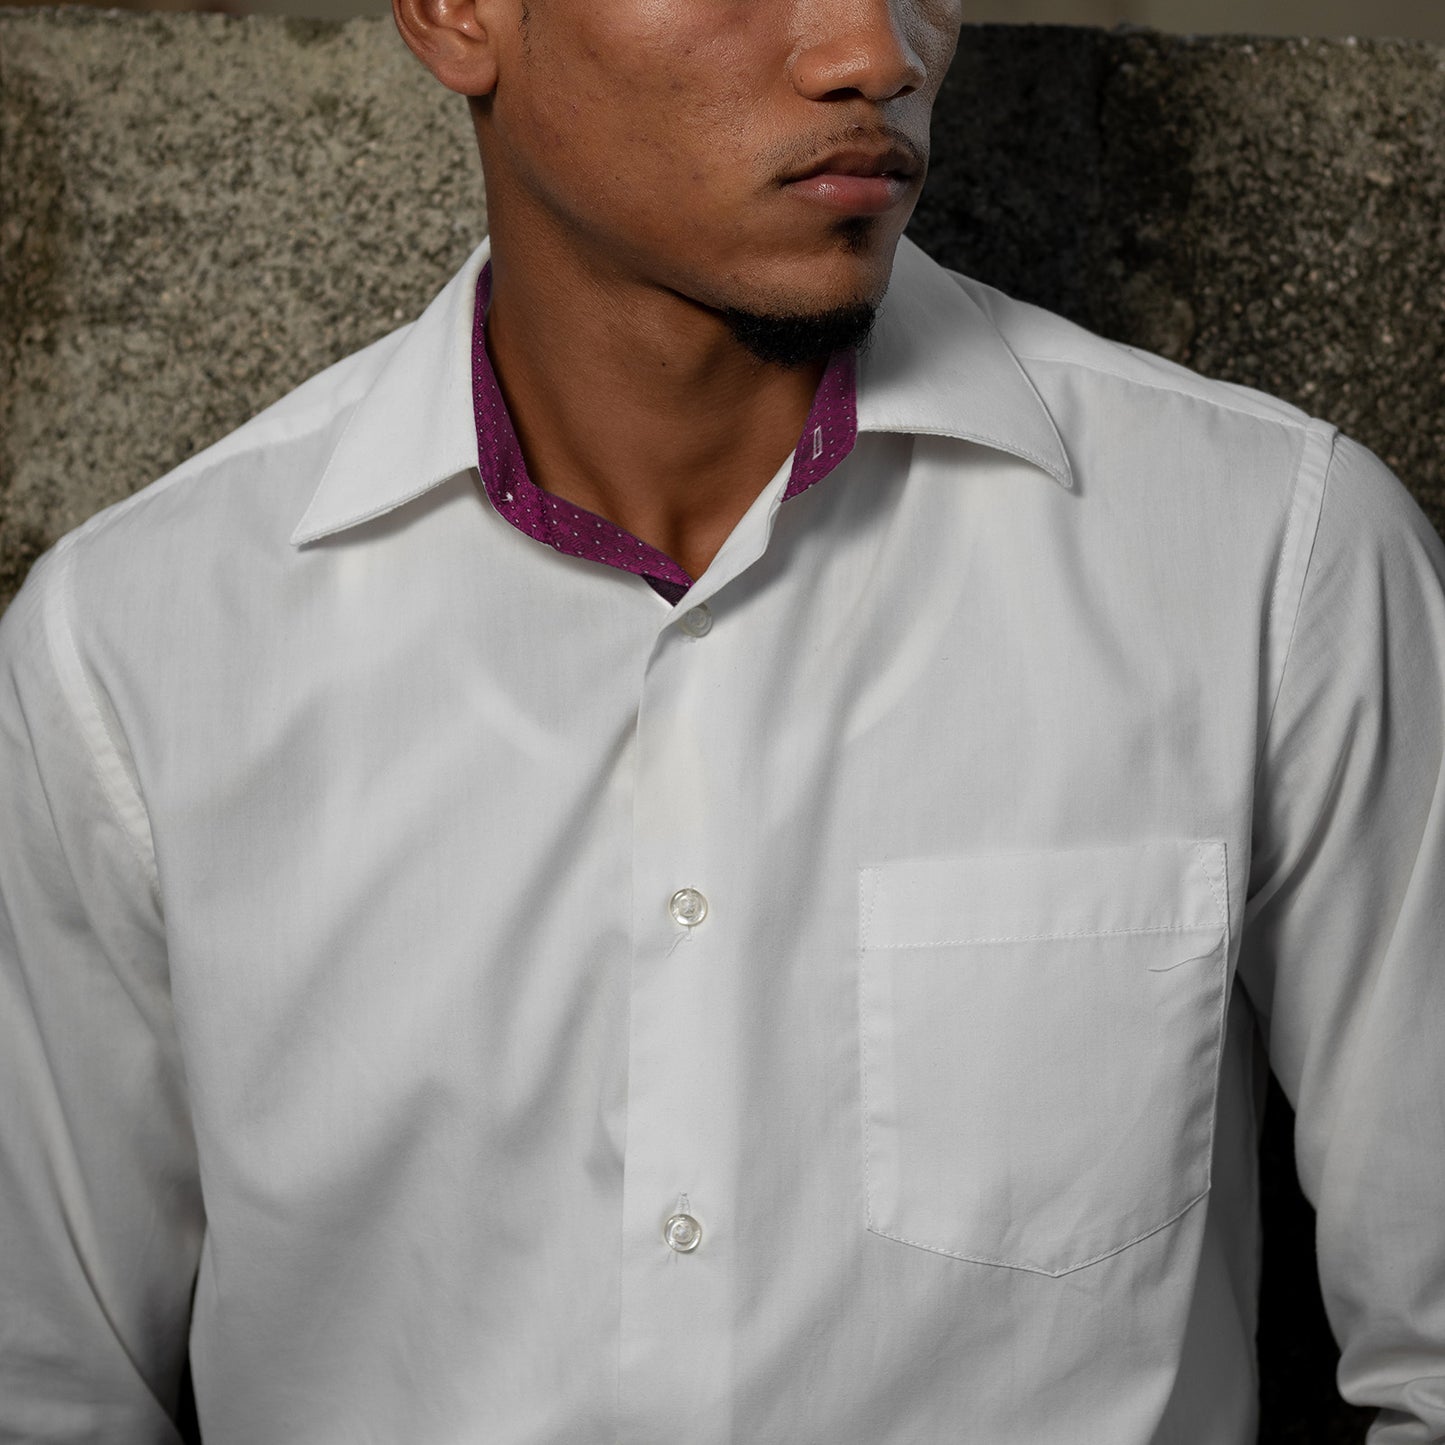 Men's Long Sleeve Dress Shirts Polka Dot Patchwork Button Down Formal Shirts, 116-White+Plum Dots